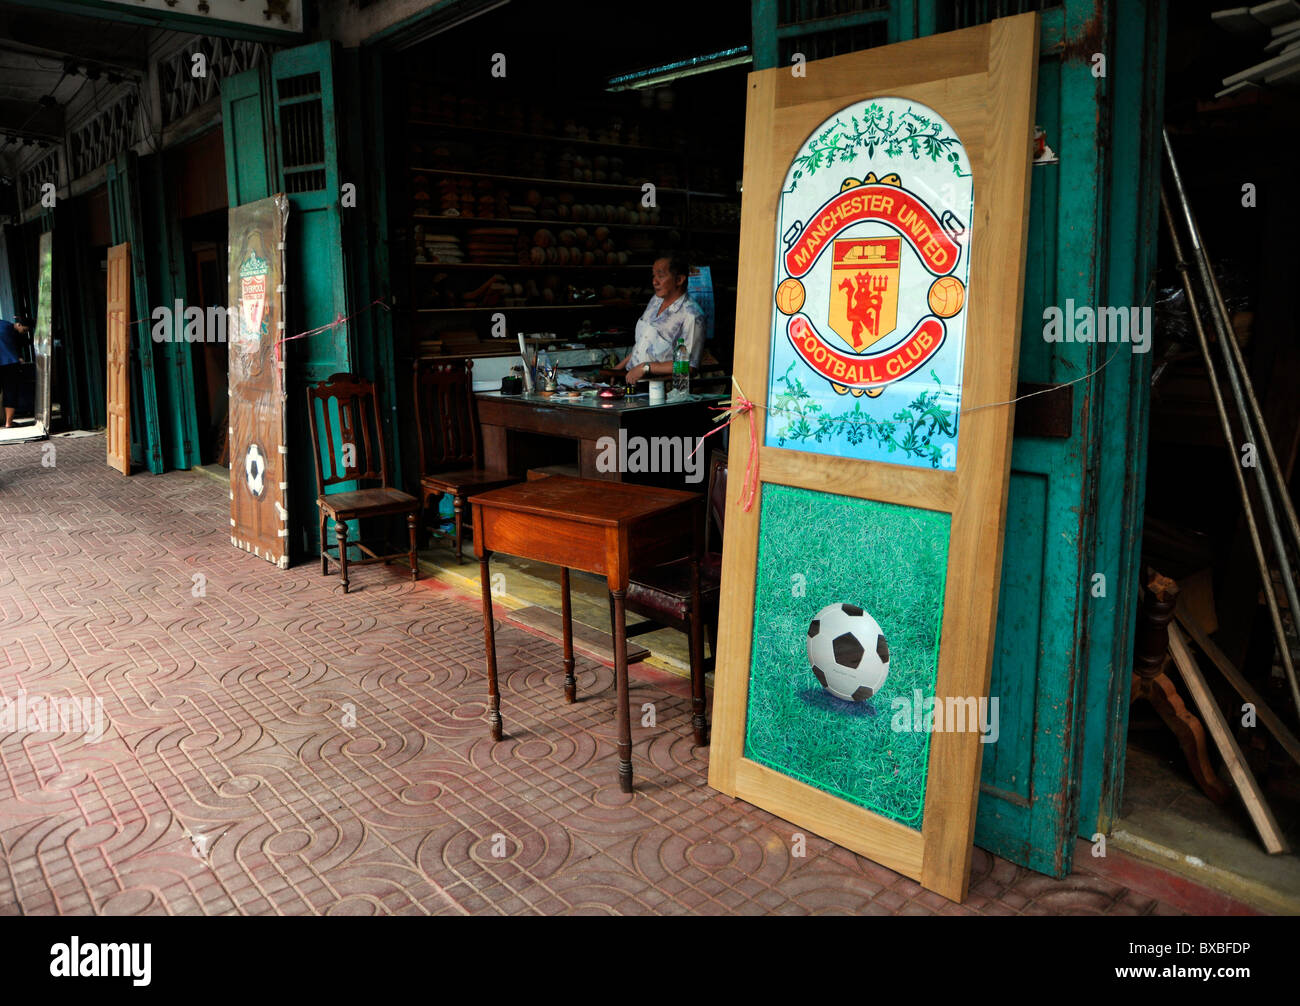 Wooden door with Manchester United logo, Bangkok, Thailand, Asia Stock Photo